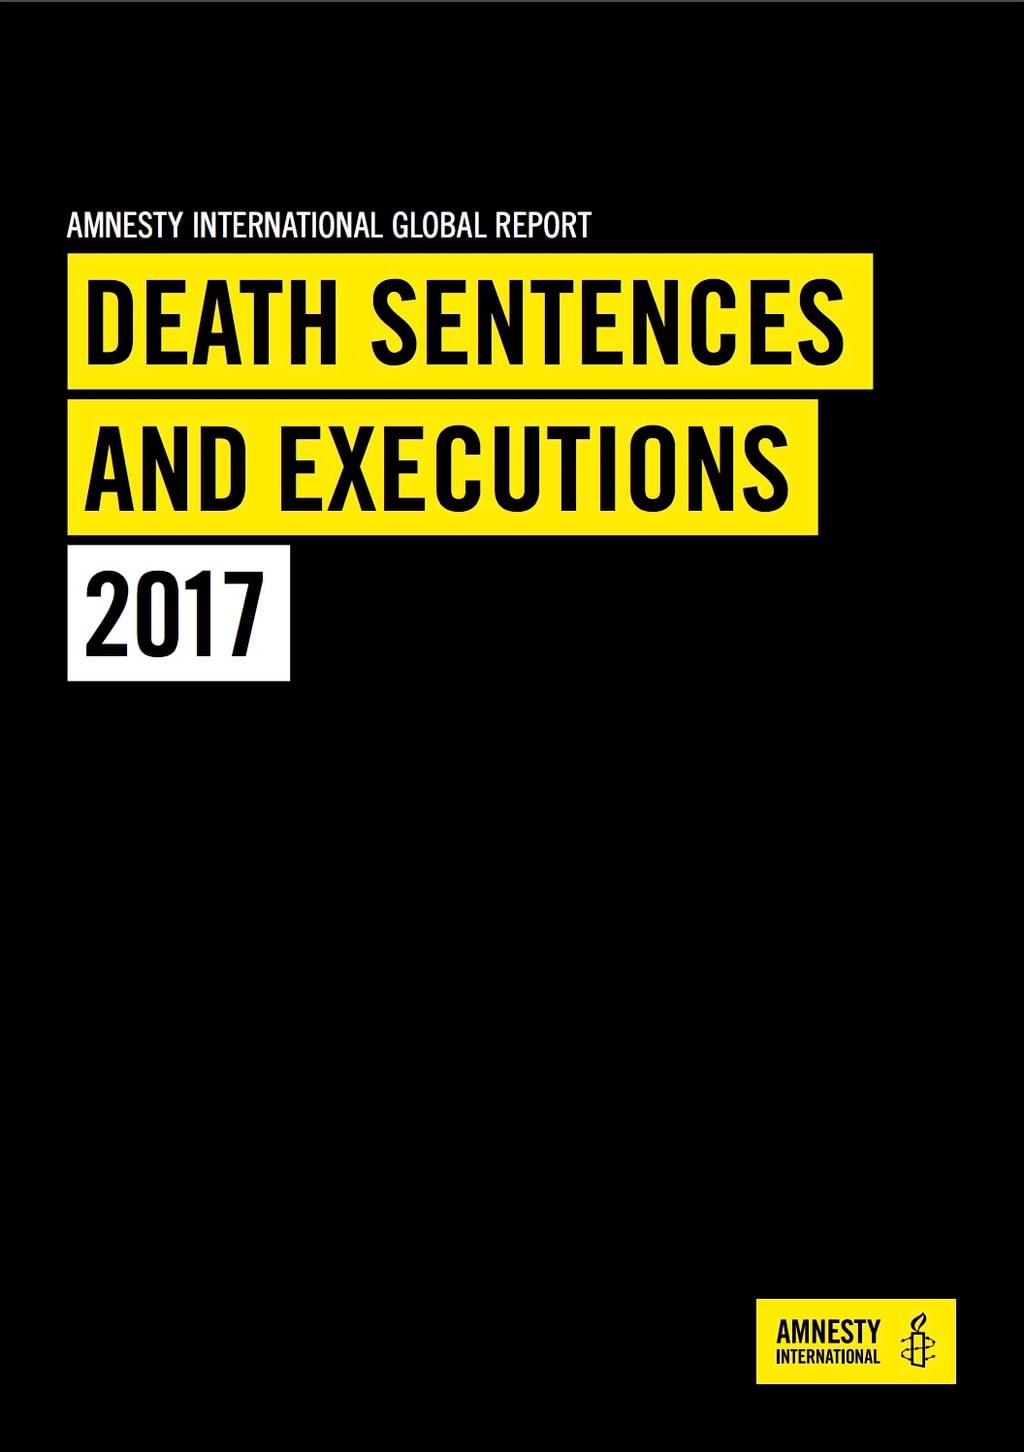 Amnesty International Report: Death Penalty Use Down Worldwide in 2017